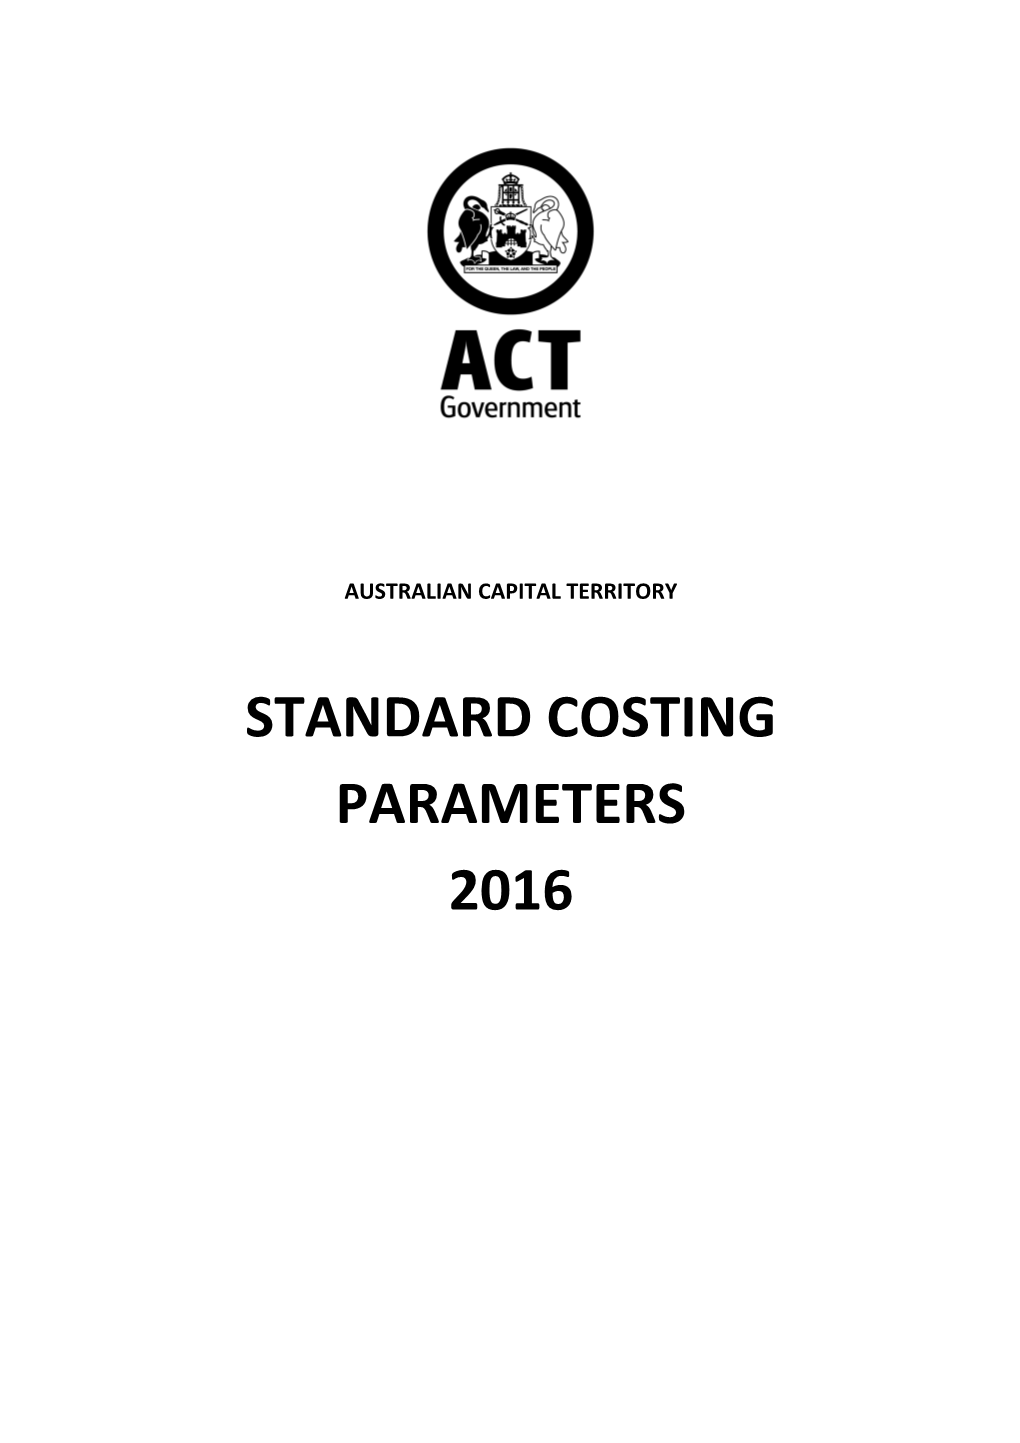 Standard Costing Parameters 2016